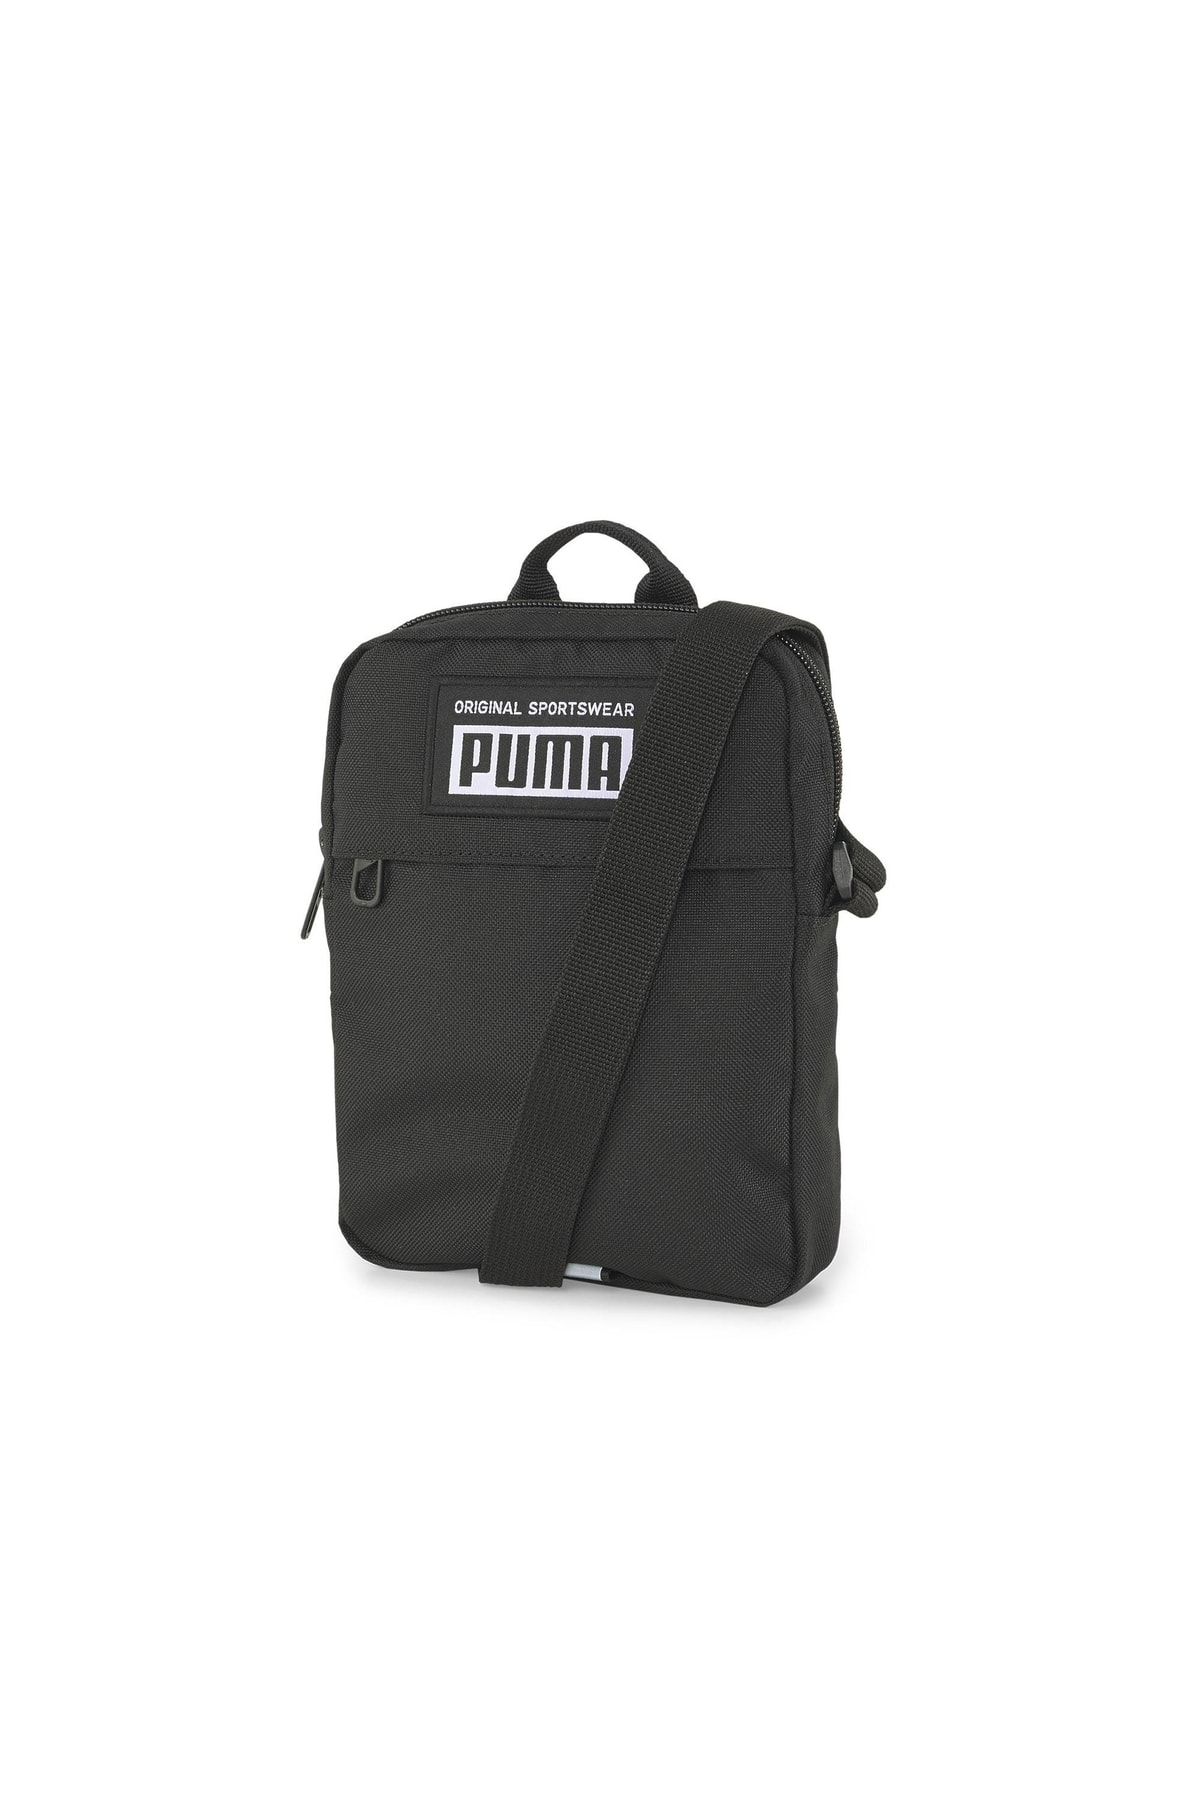 Puma Academy Portable Omuz Çantası 7913501 Siyah